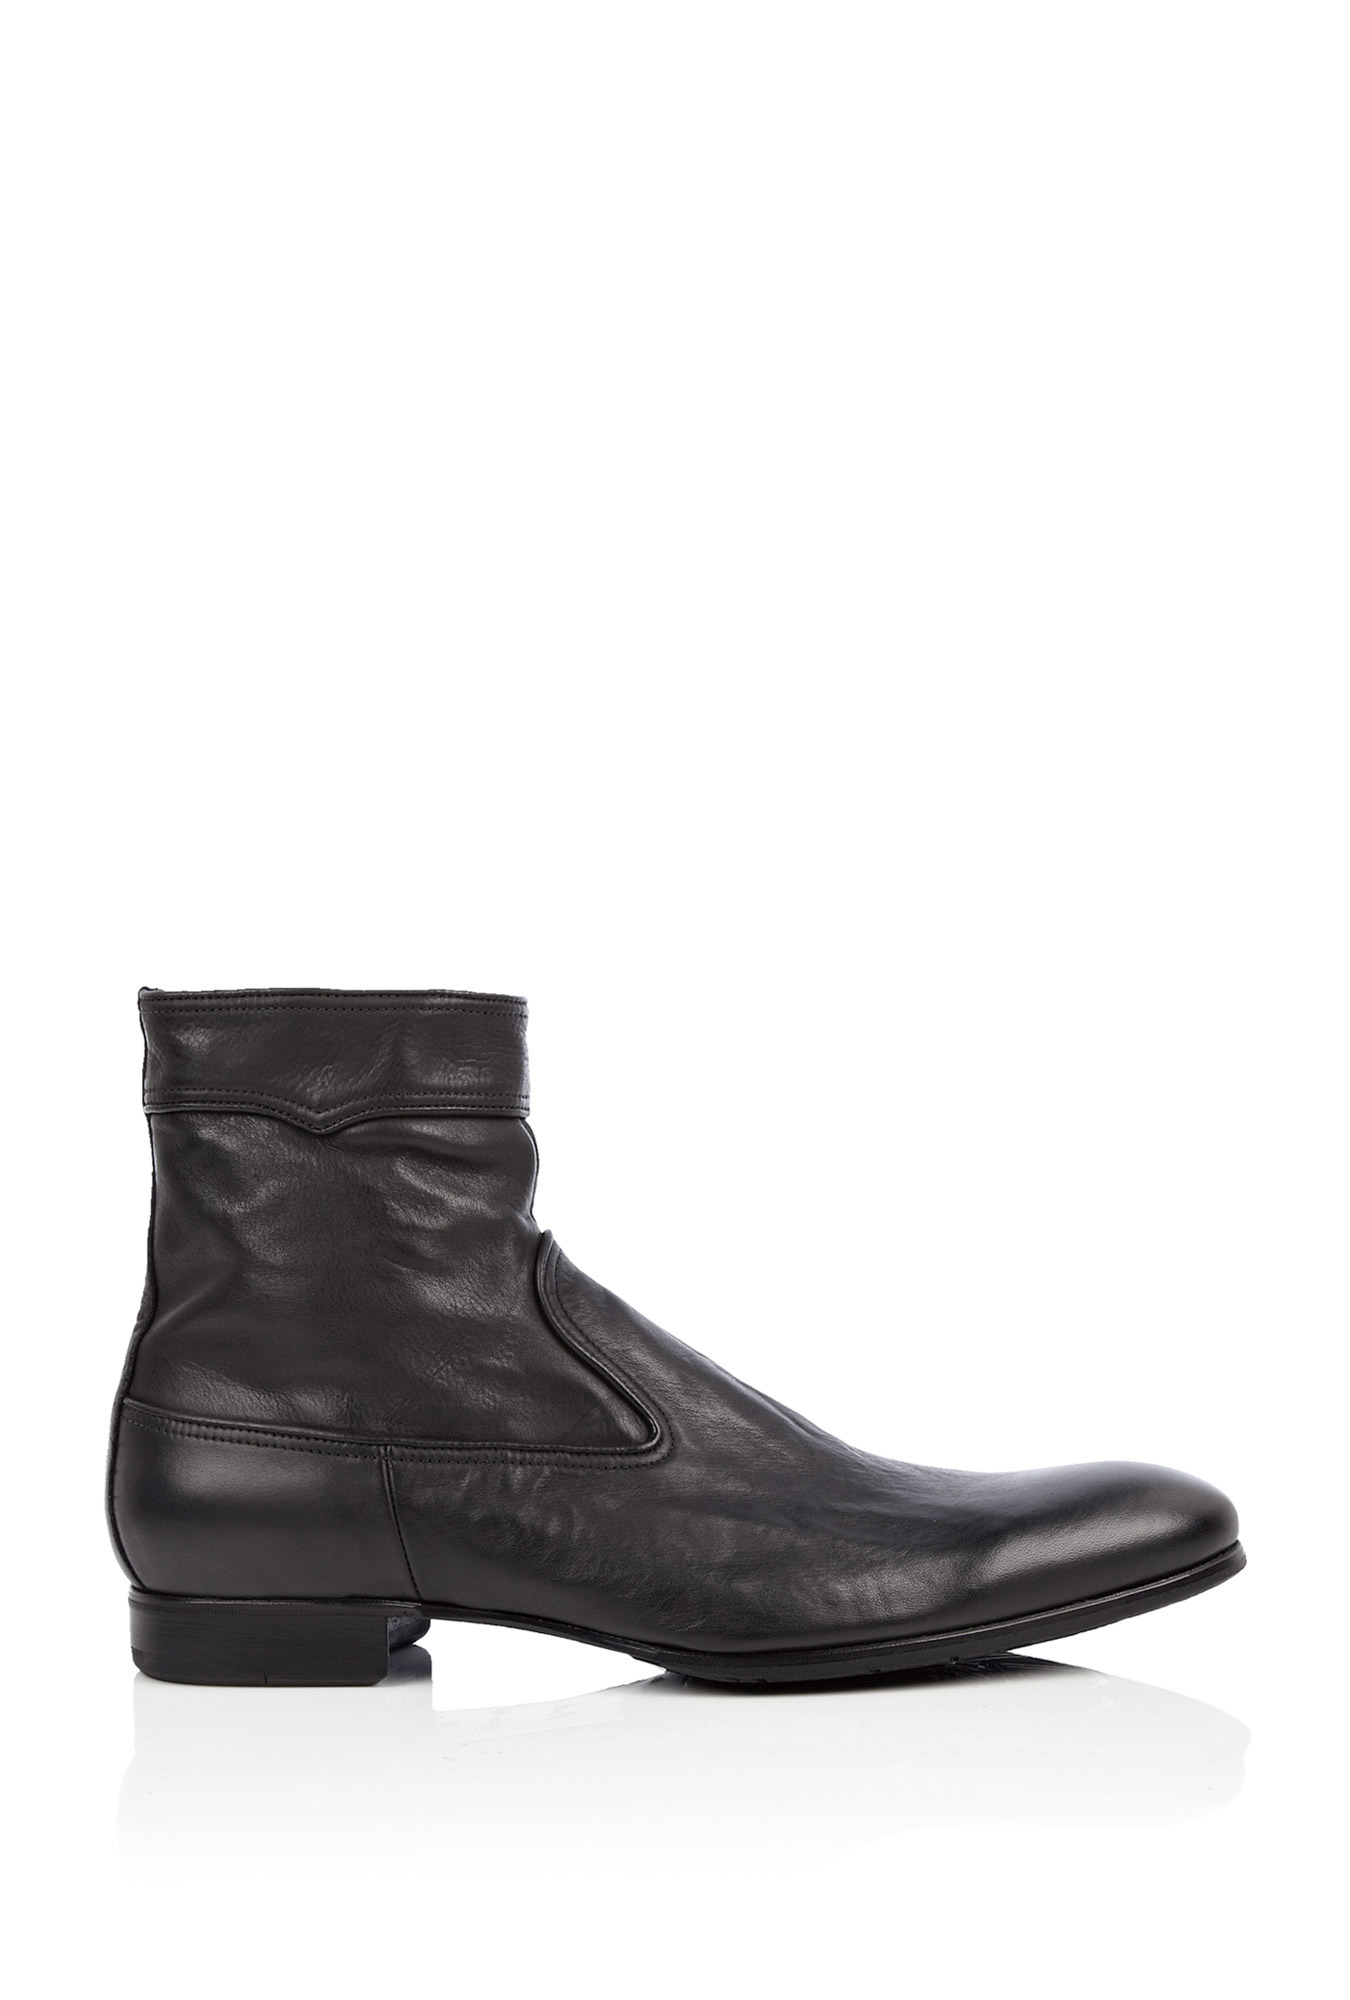 Paul Smith Black Dip Dyed Side Zip Kasmin Boots in Black for Men | Lyst